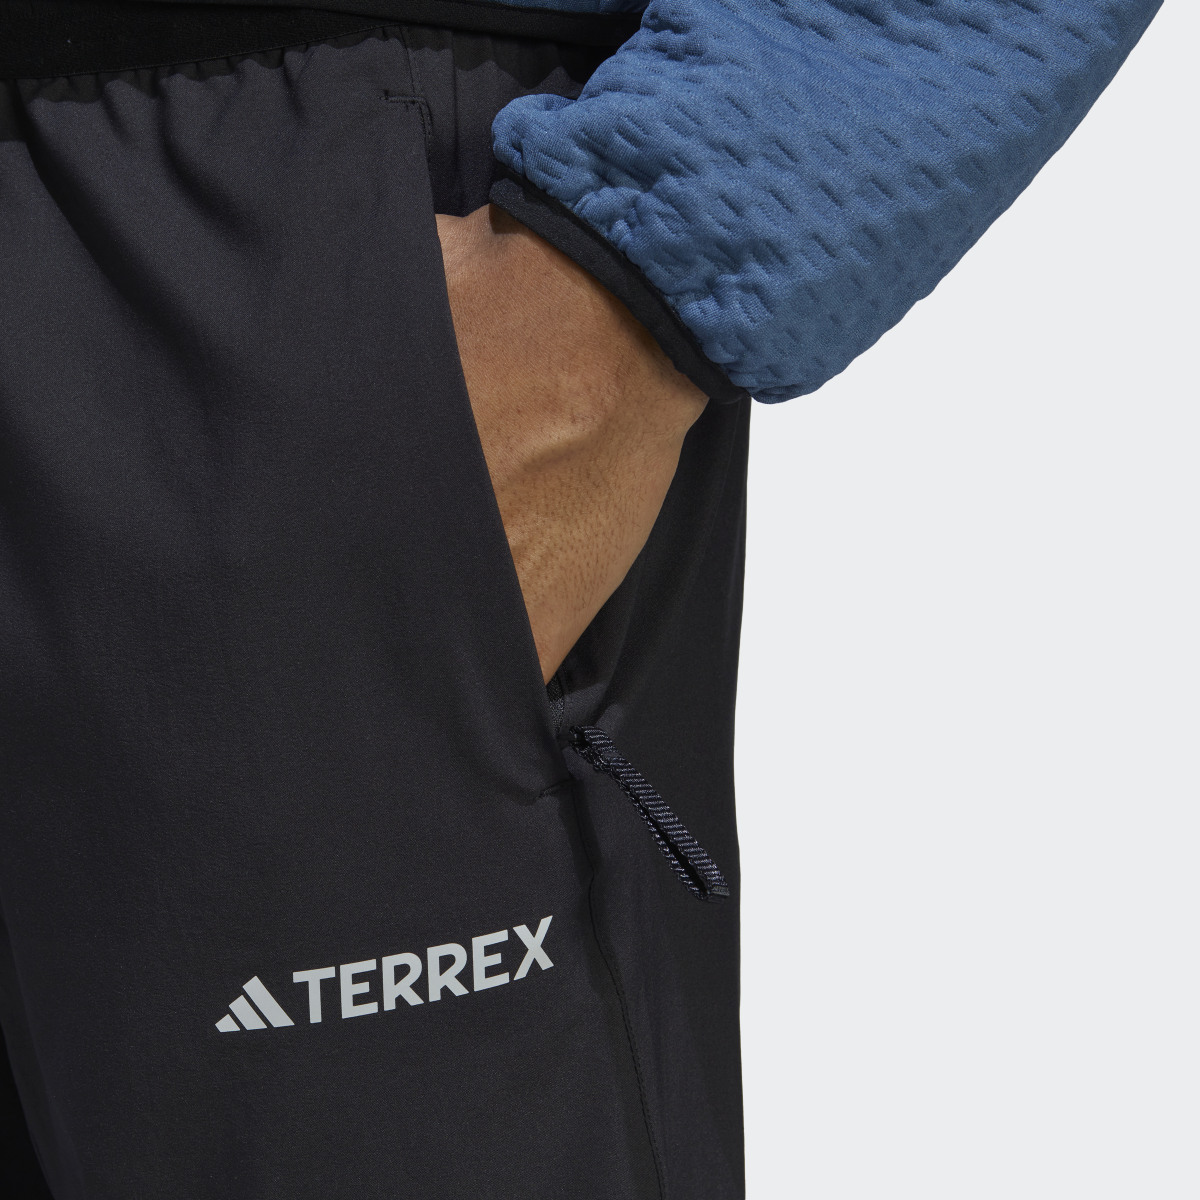 Adidas Terrex LiteFlex Pants. 8